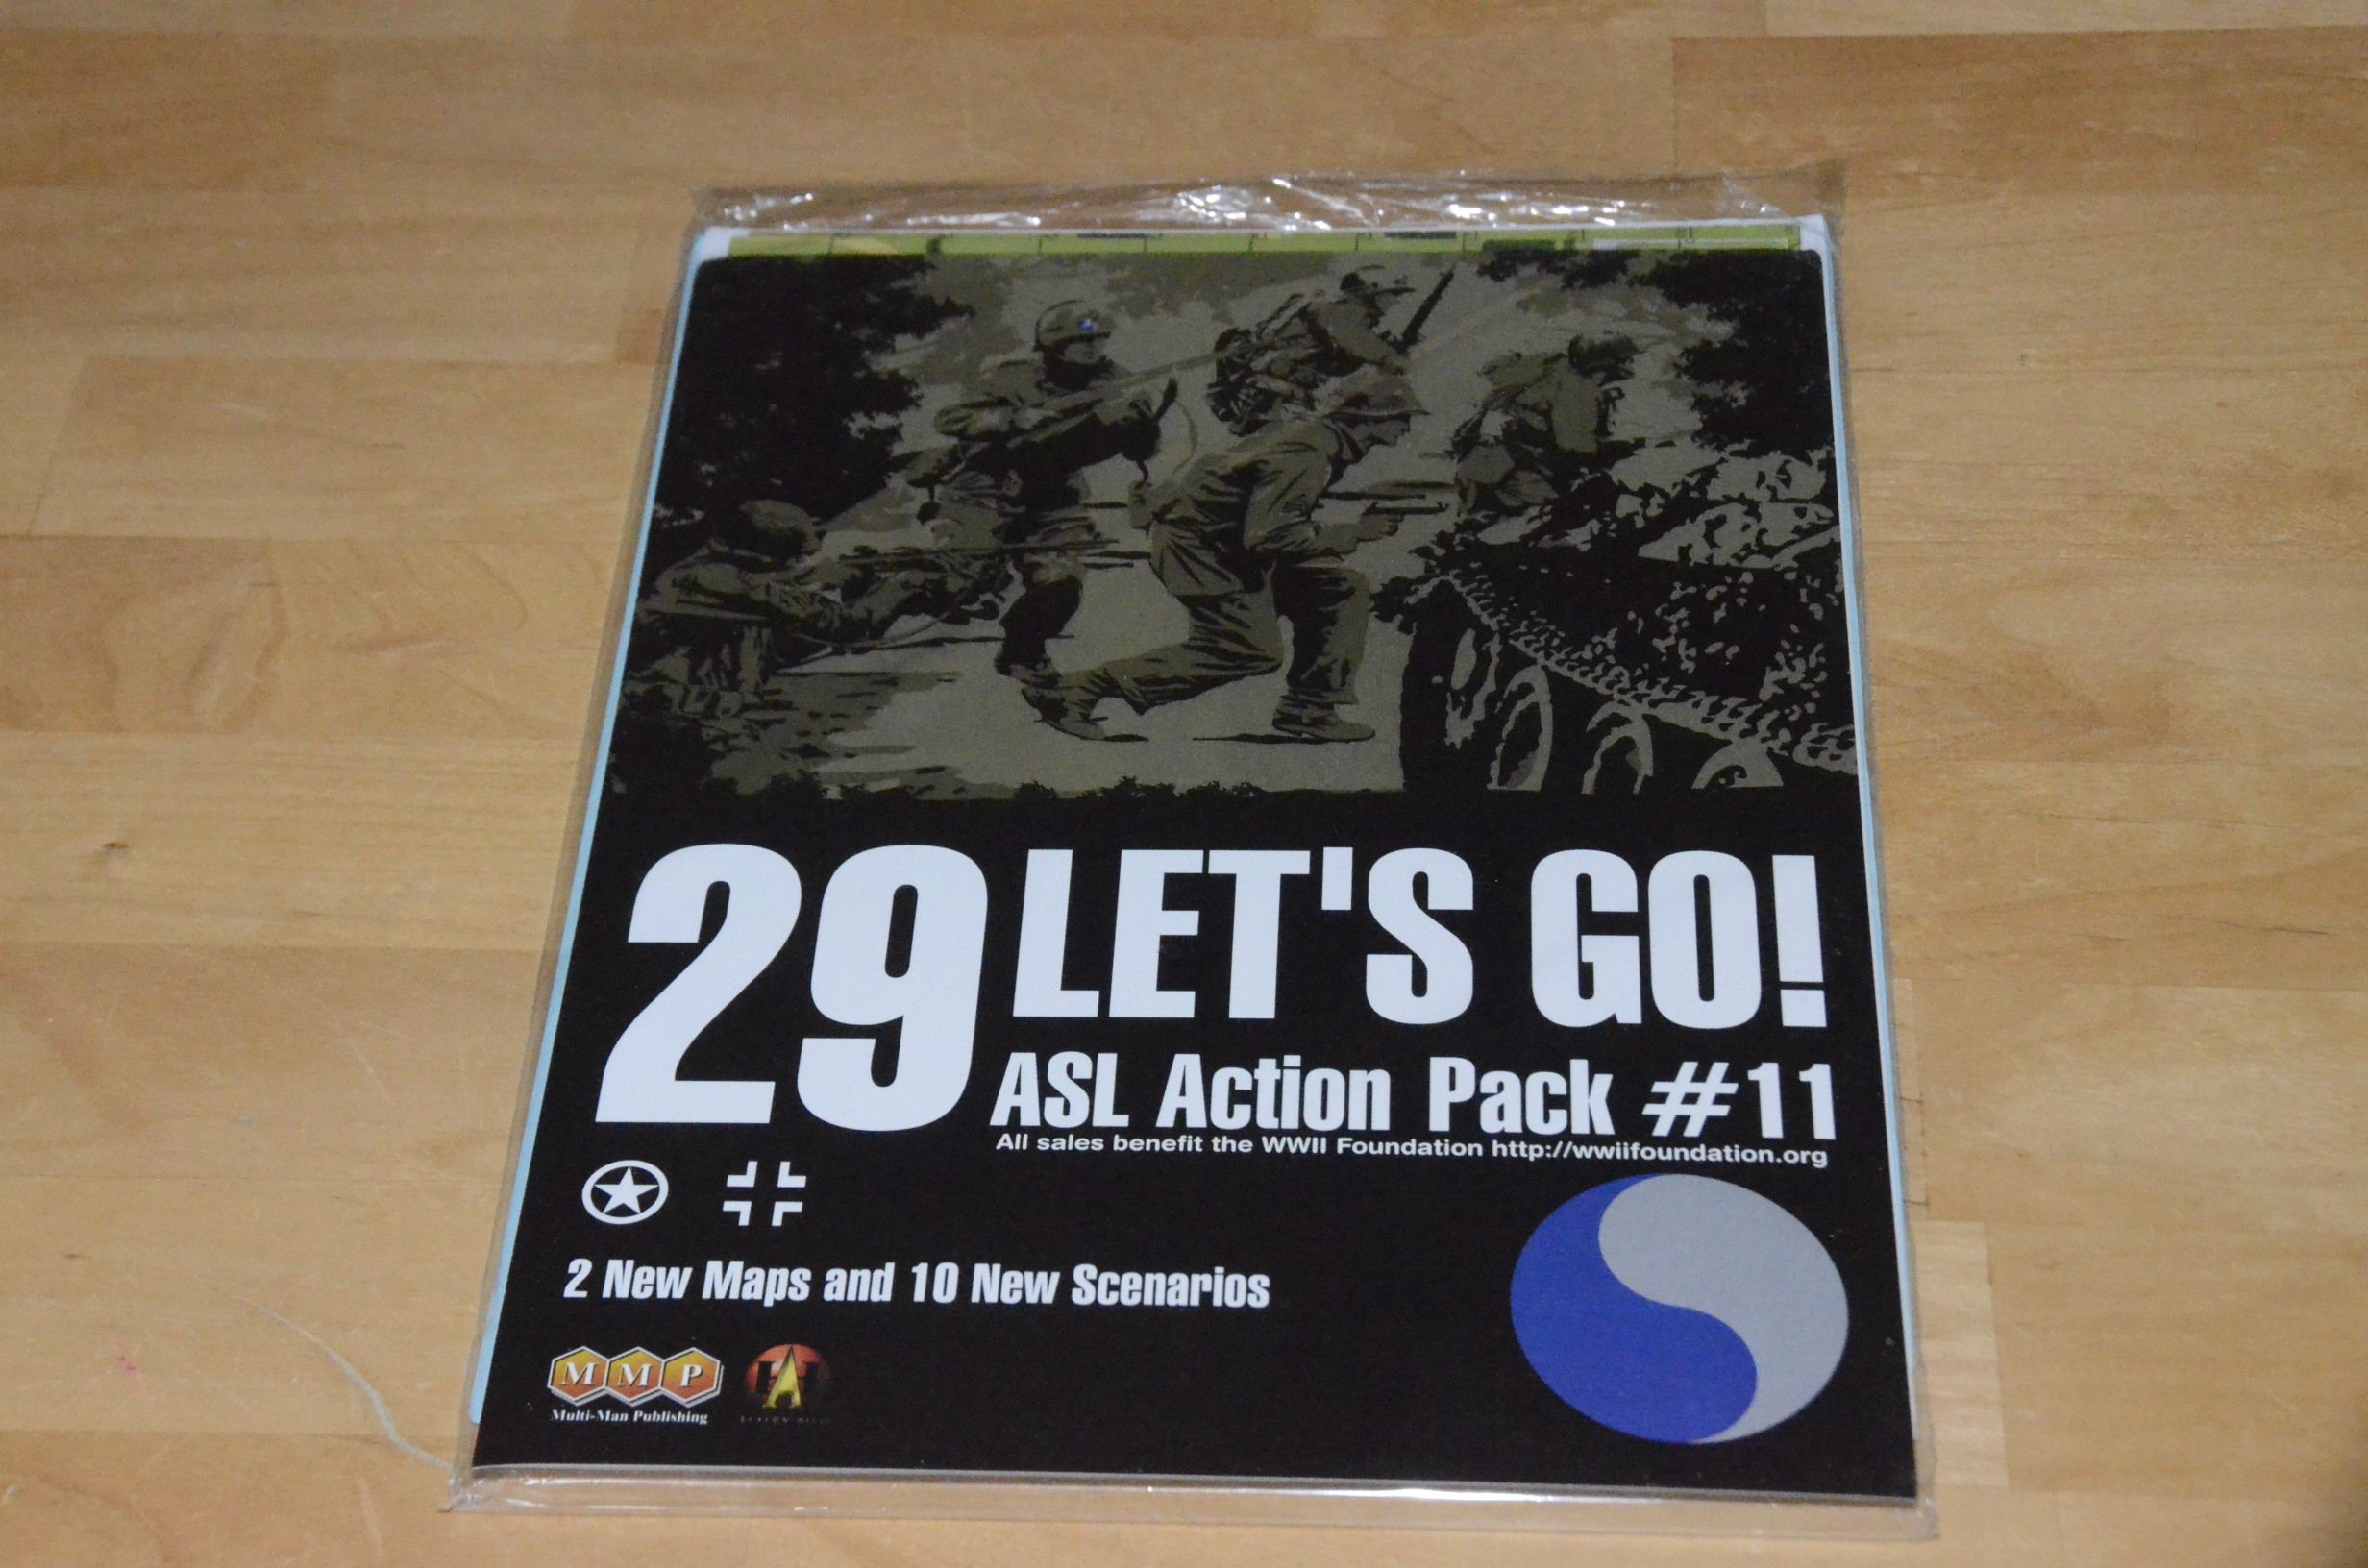 Product Details | ASL Action Pack #11: 29 Let's Go! | GeekMarket